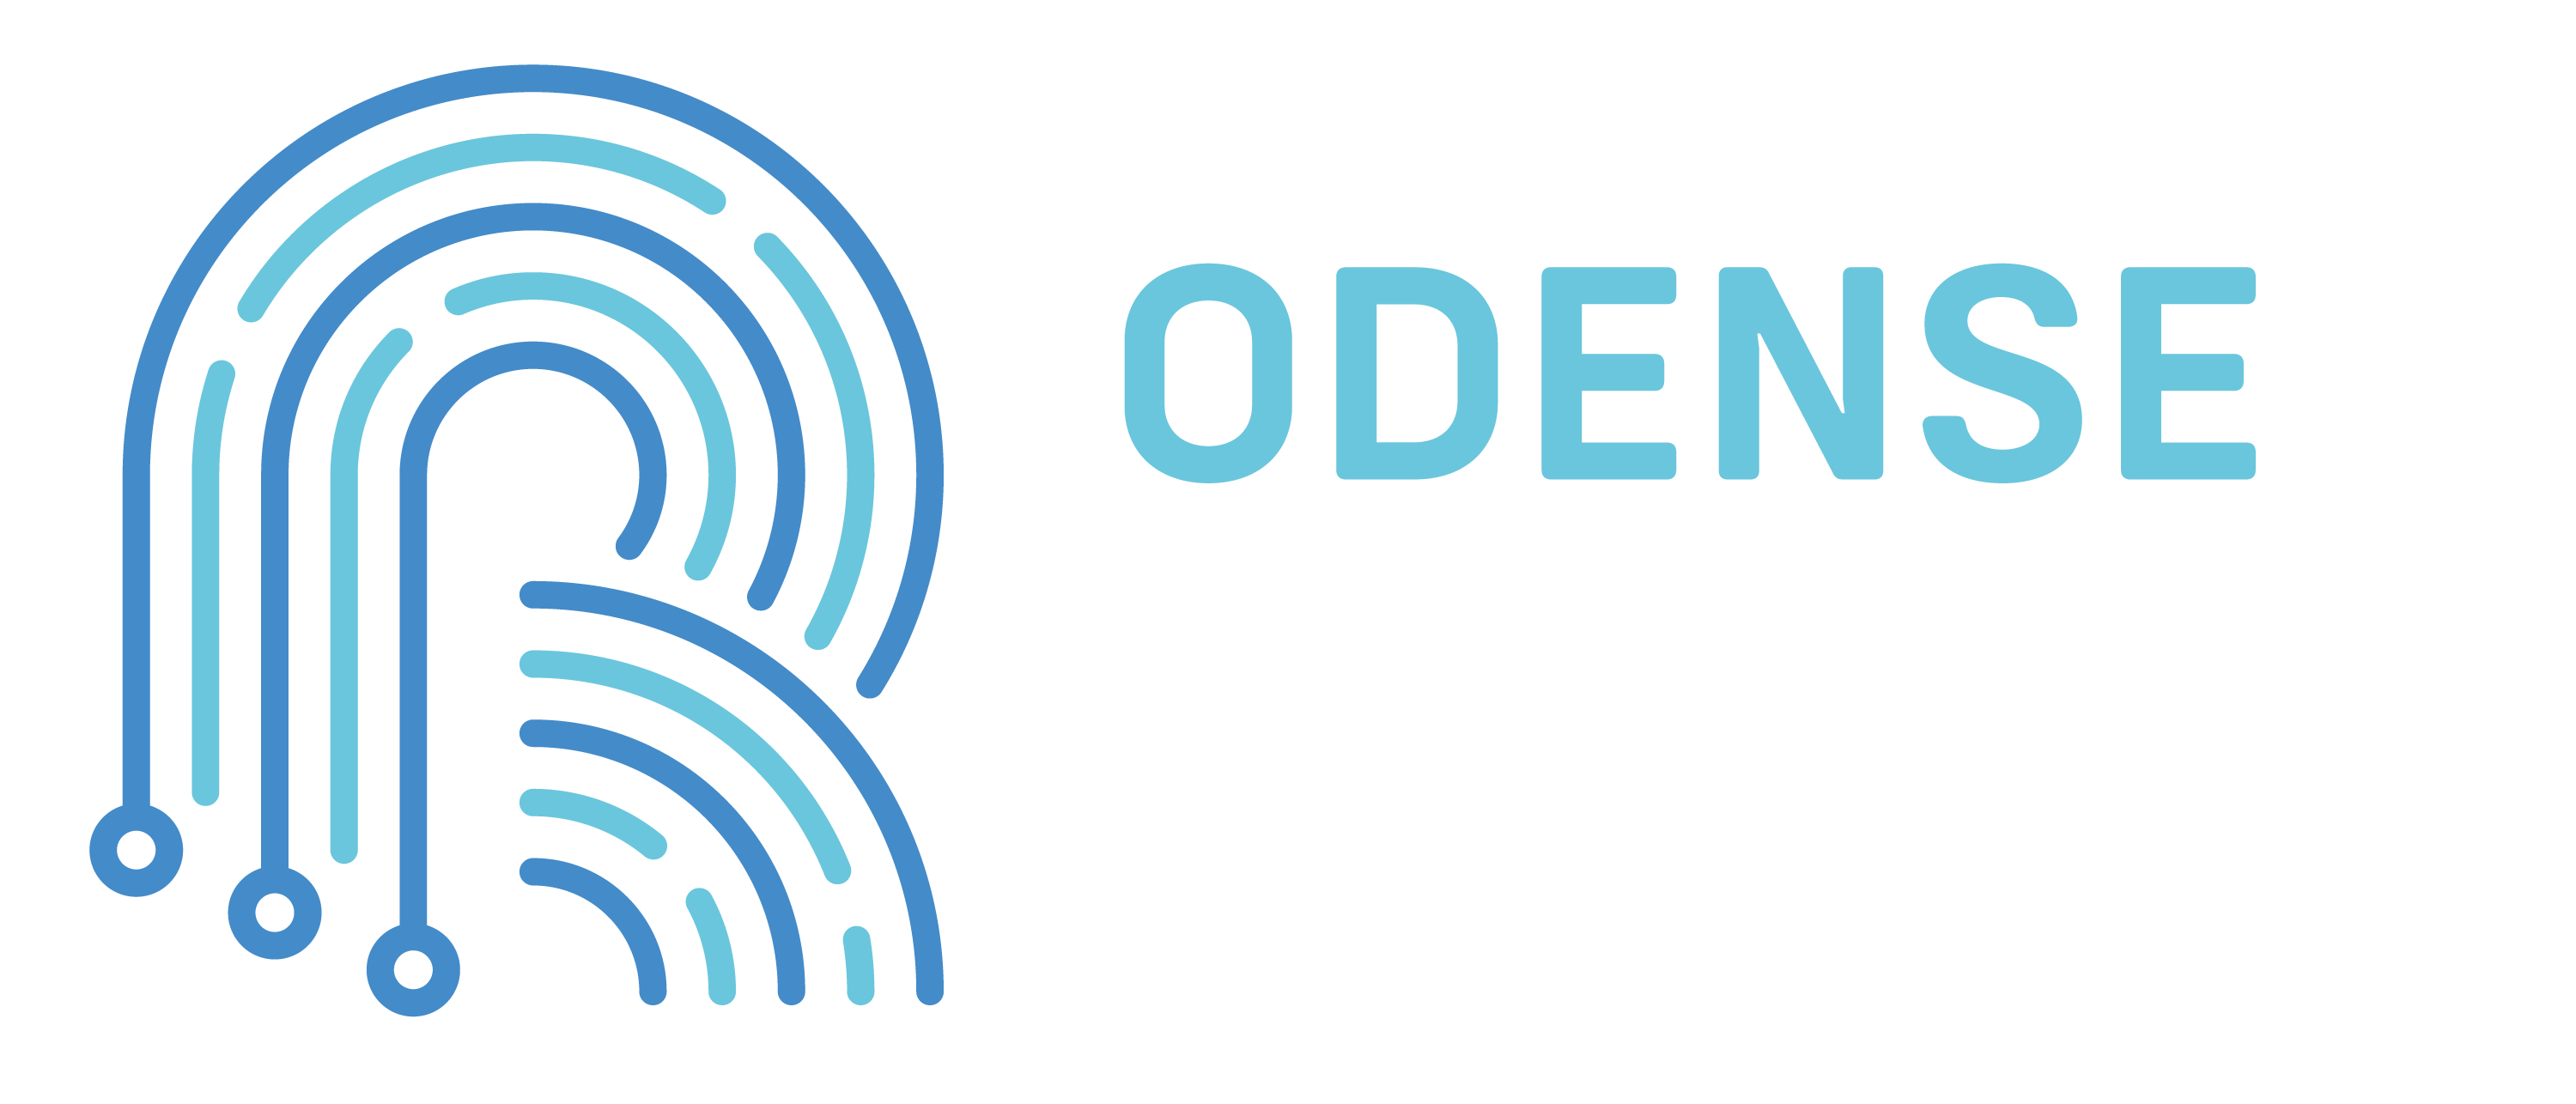 Odense_robotics_netvork